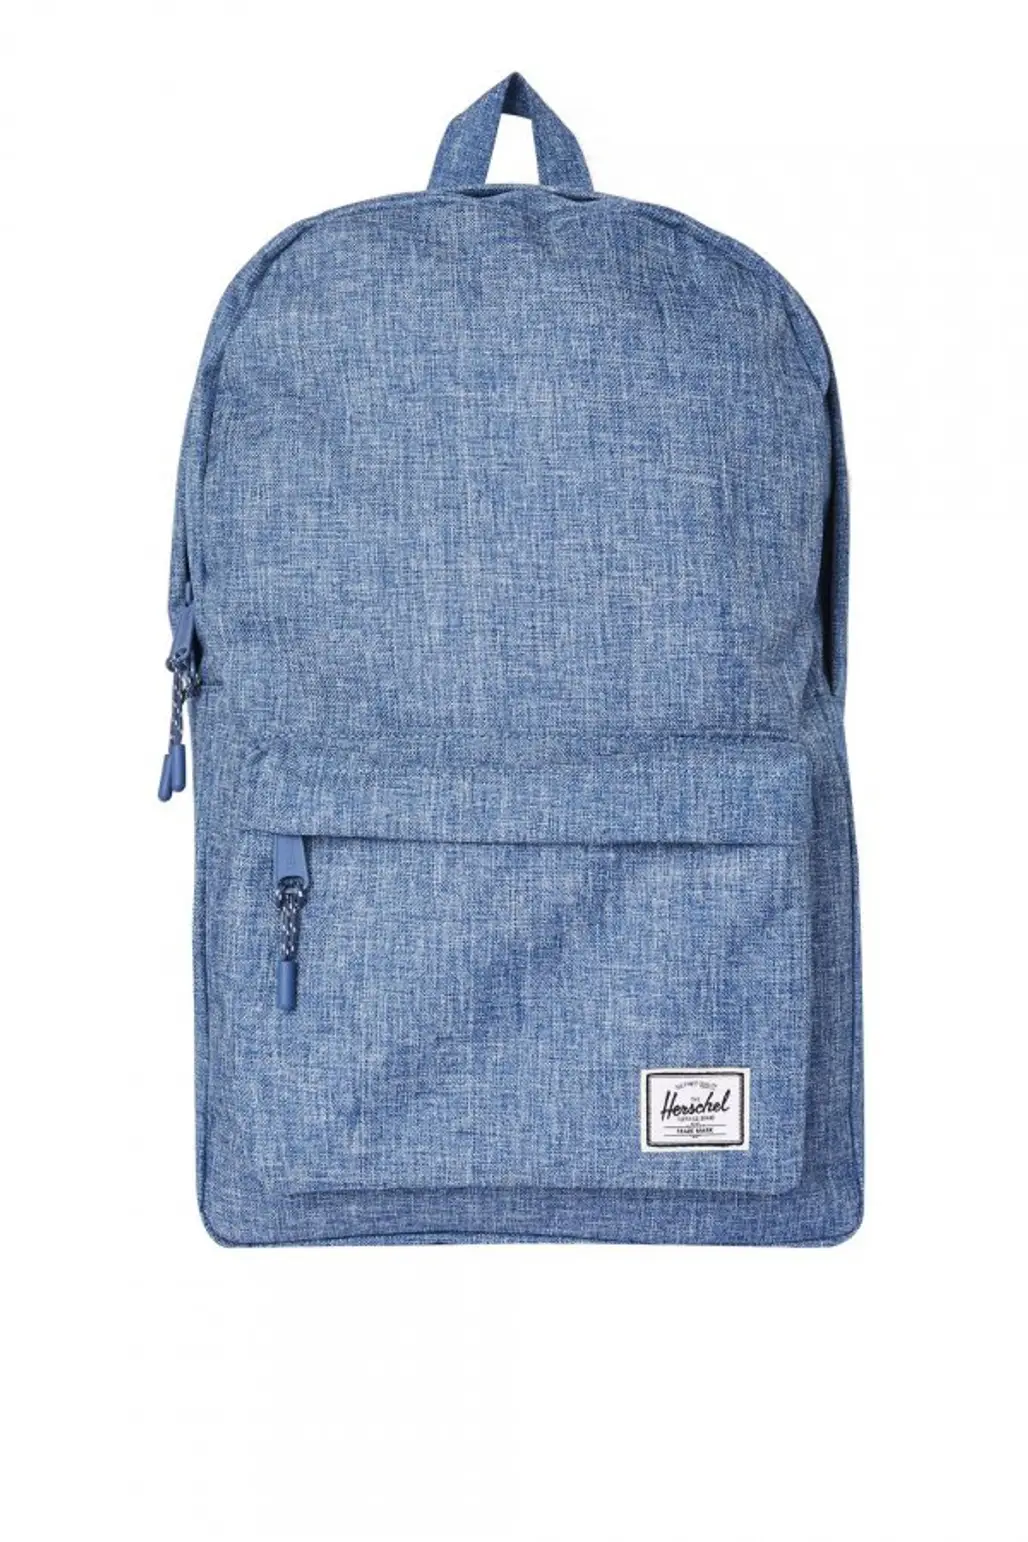 bag, electric blue, backpack, pattern,